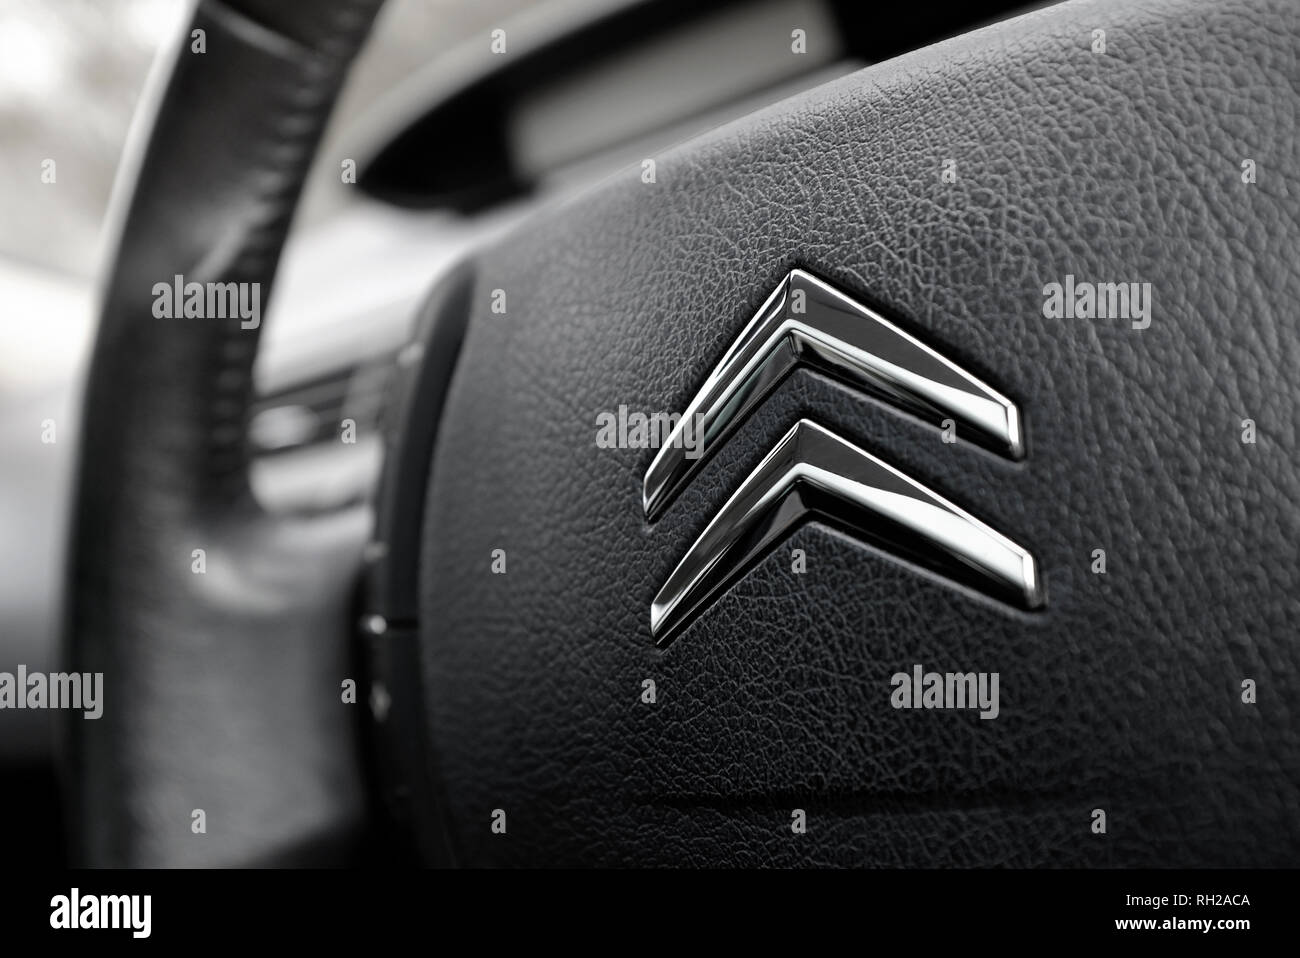 citroen logo on car steering wheel Stock Photo